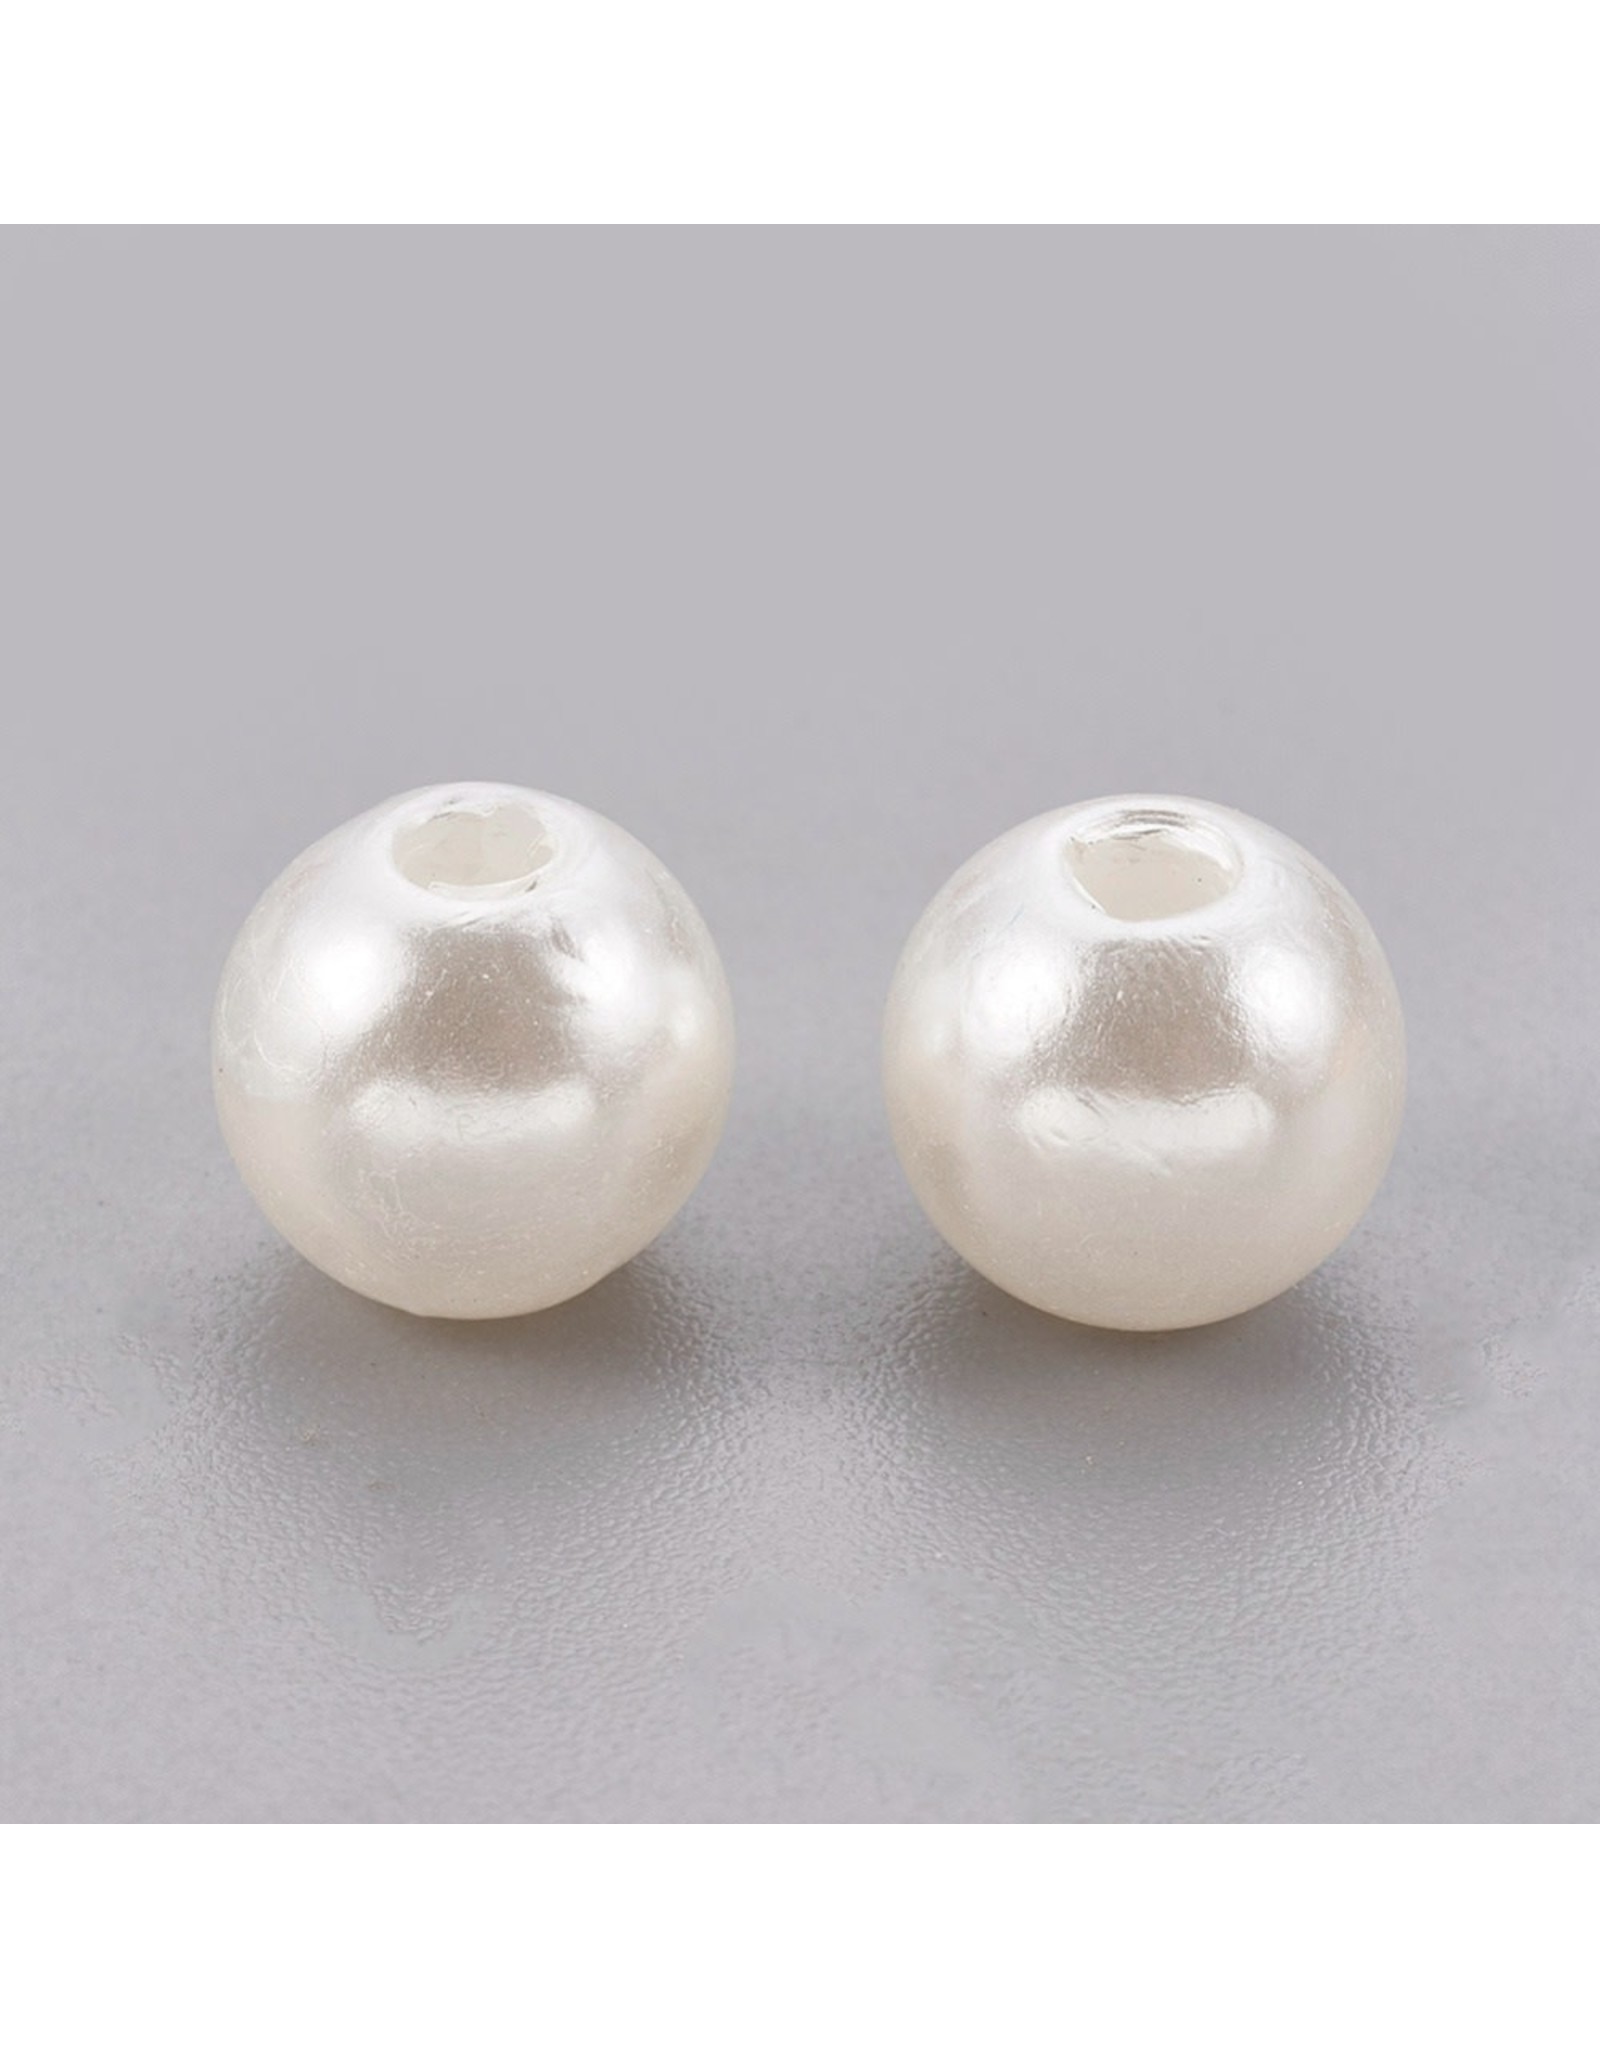 Craft Pearls  18mm Cream  x12